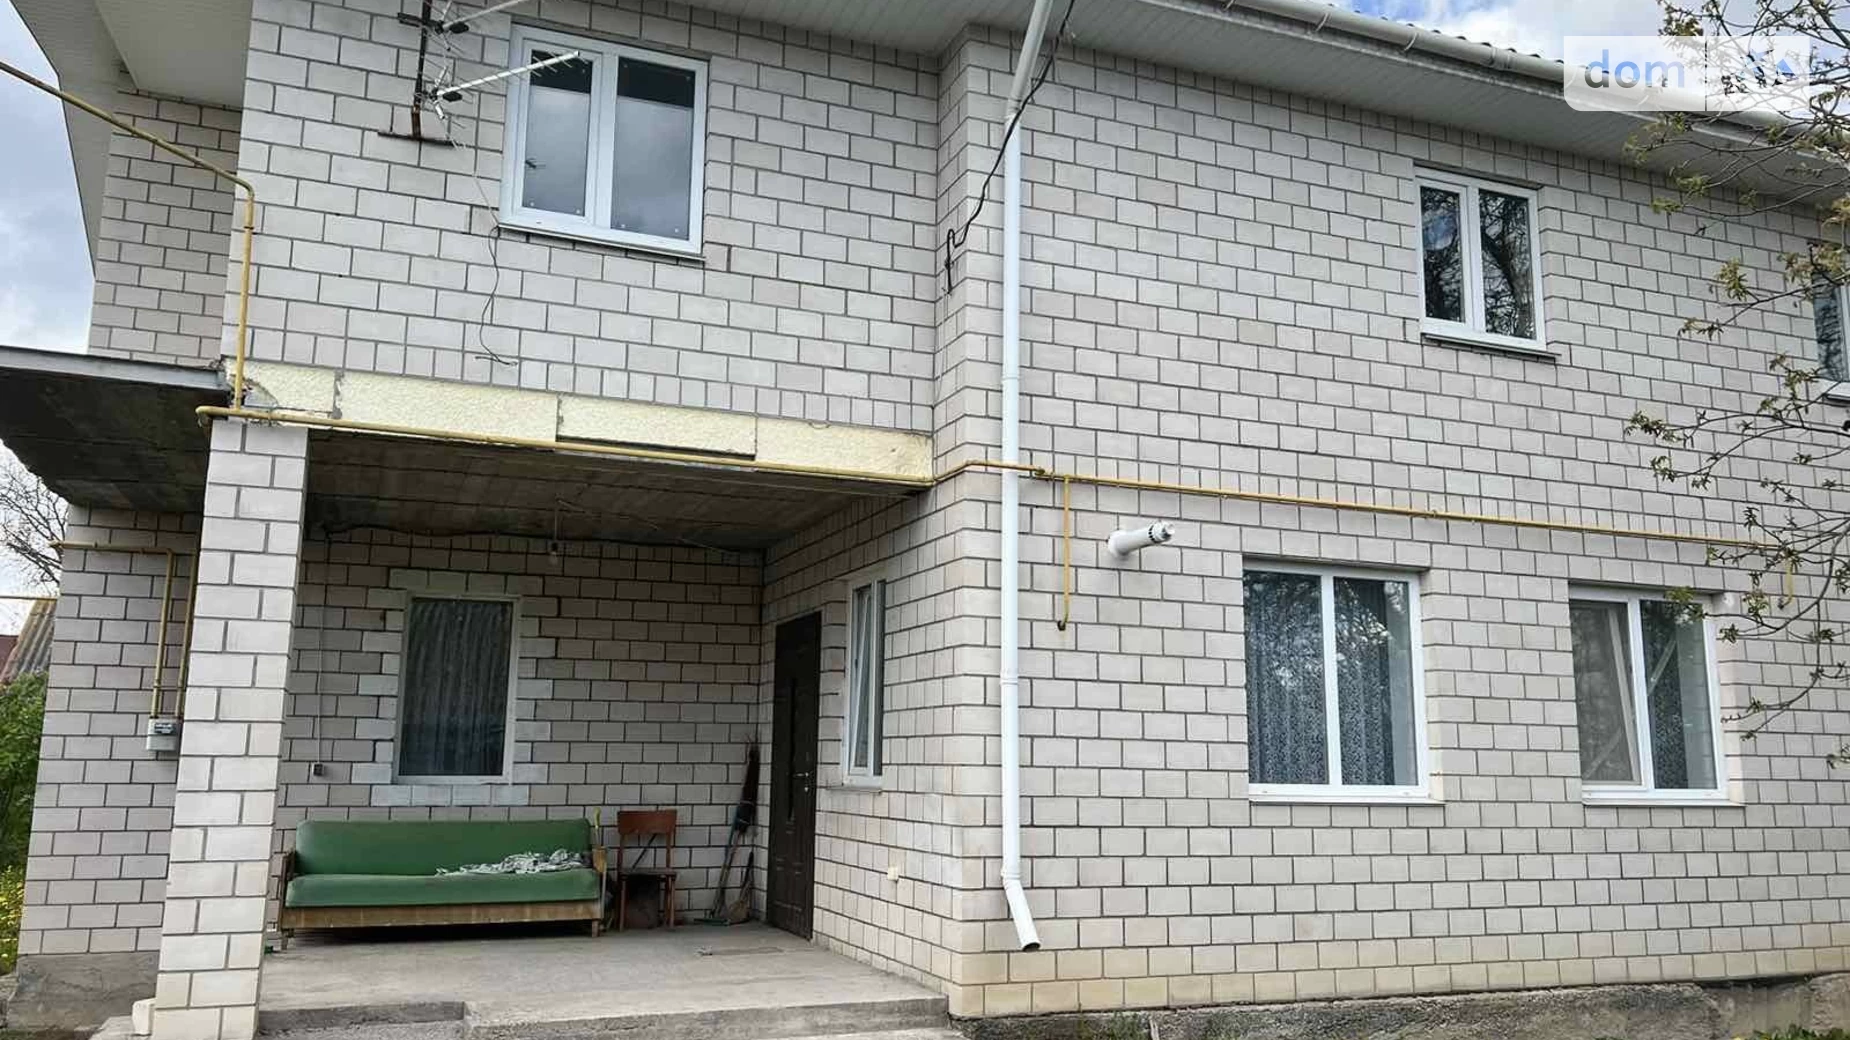 Продается дом на 2 этажа 85 кв. м с участком, ул. Ярослава Мудрого